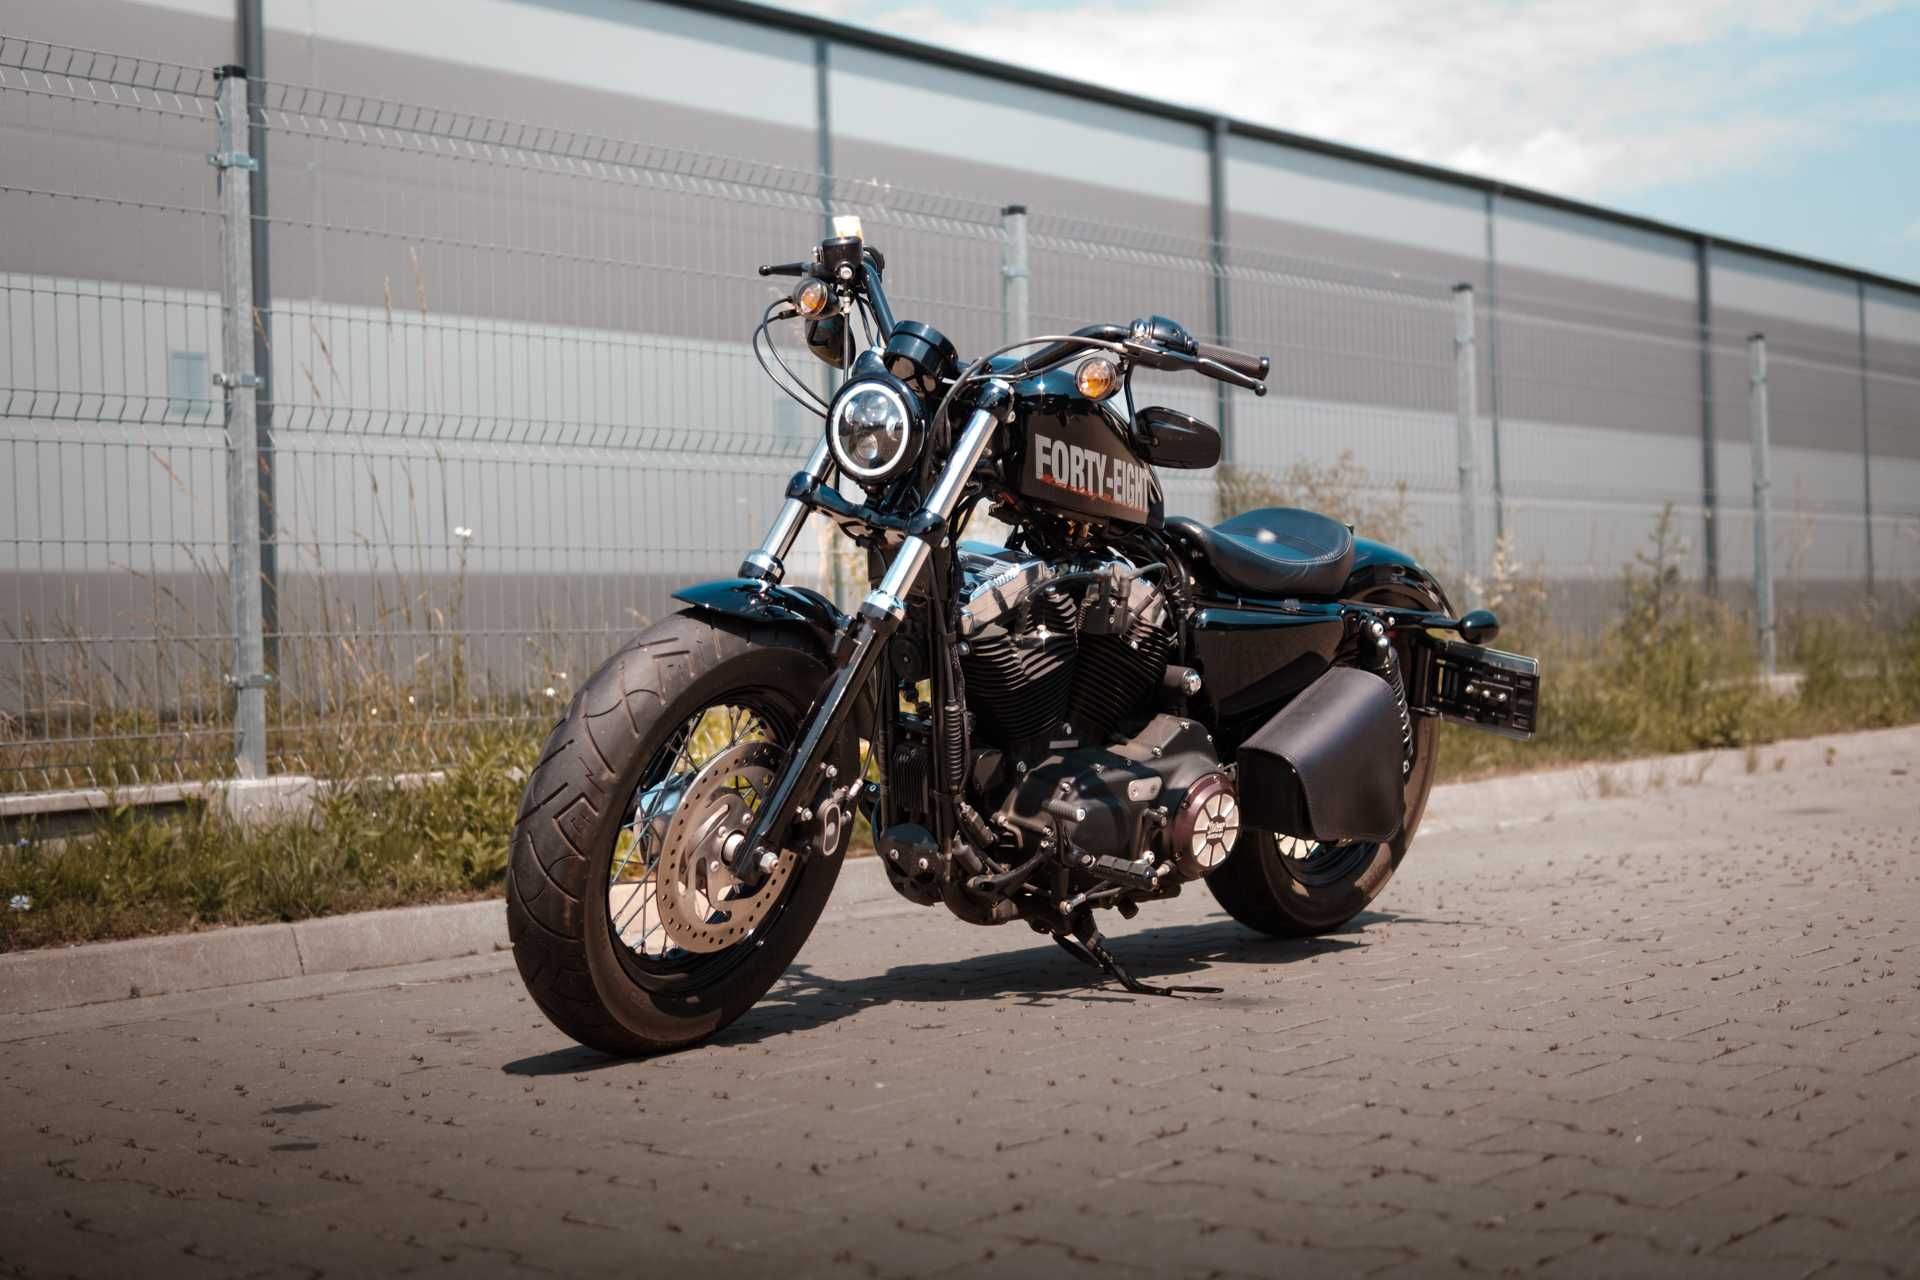 Harley-Davidson Sportster 1200 Forty-Eight